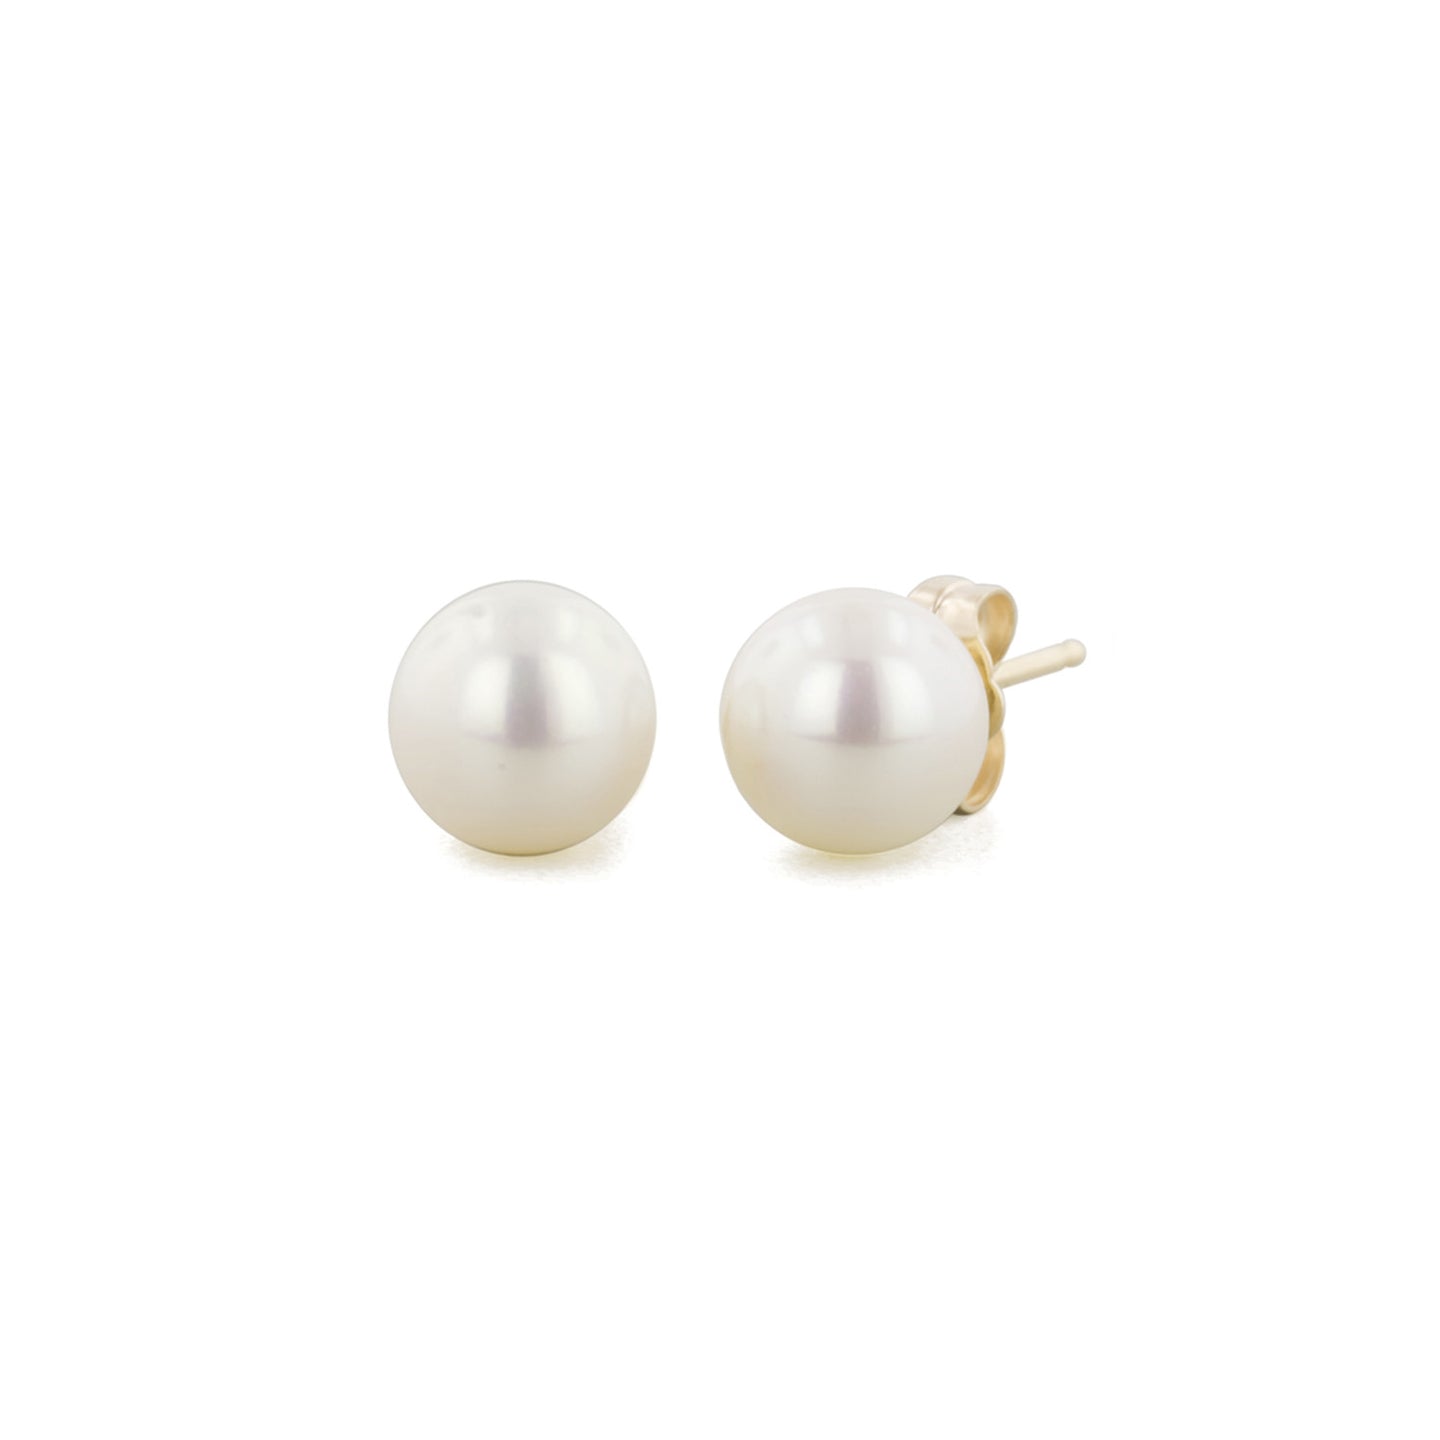 Sabel Pearl Near Round Pearl Earrings in 8mm